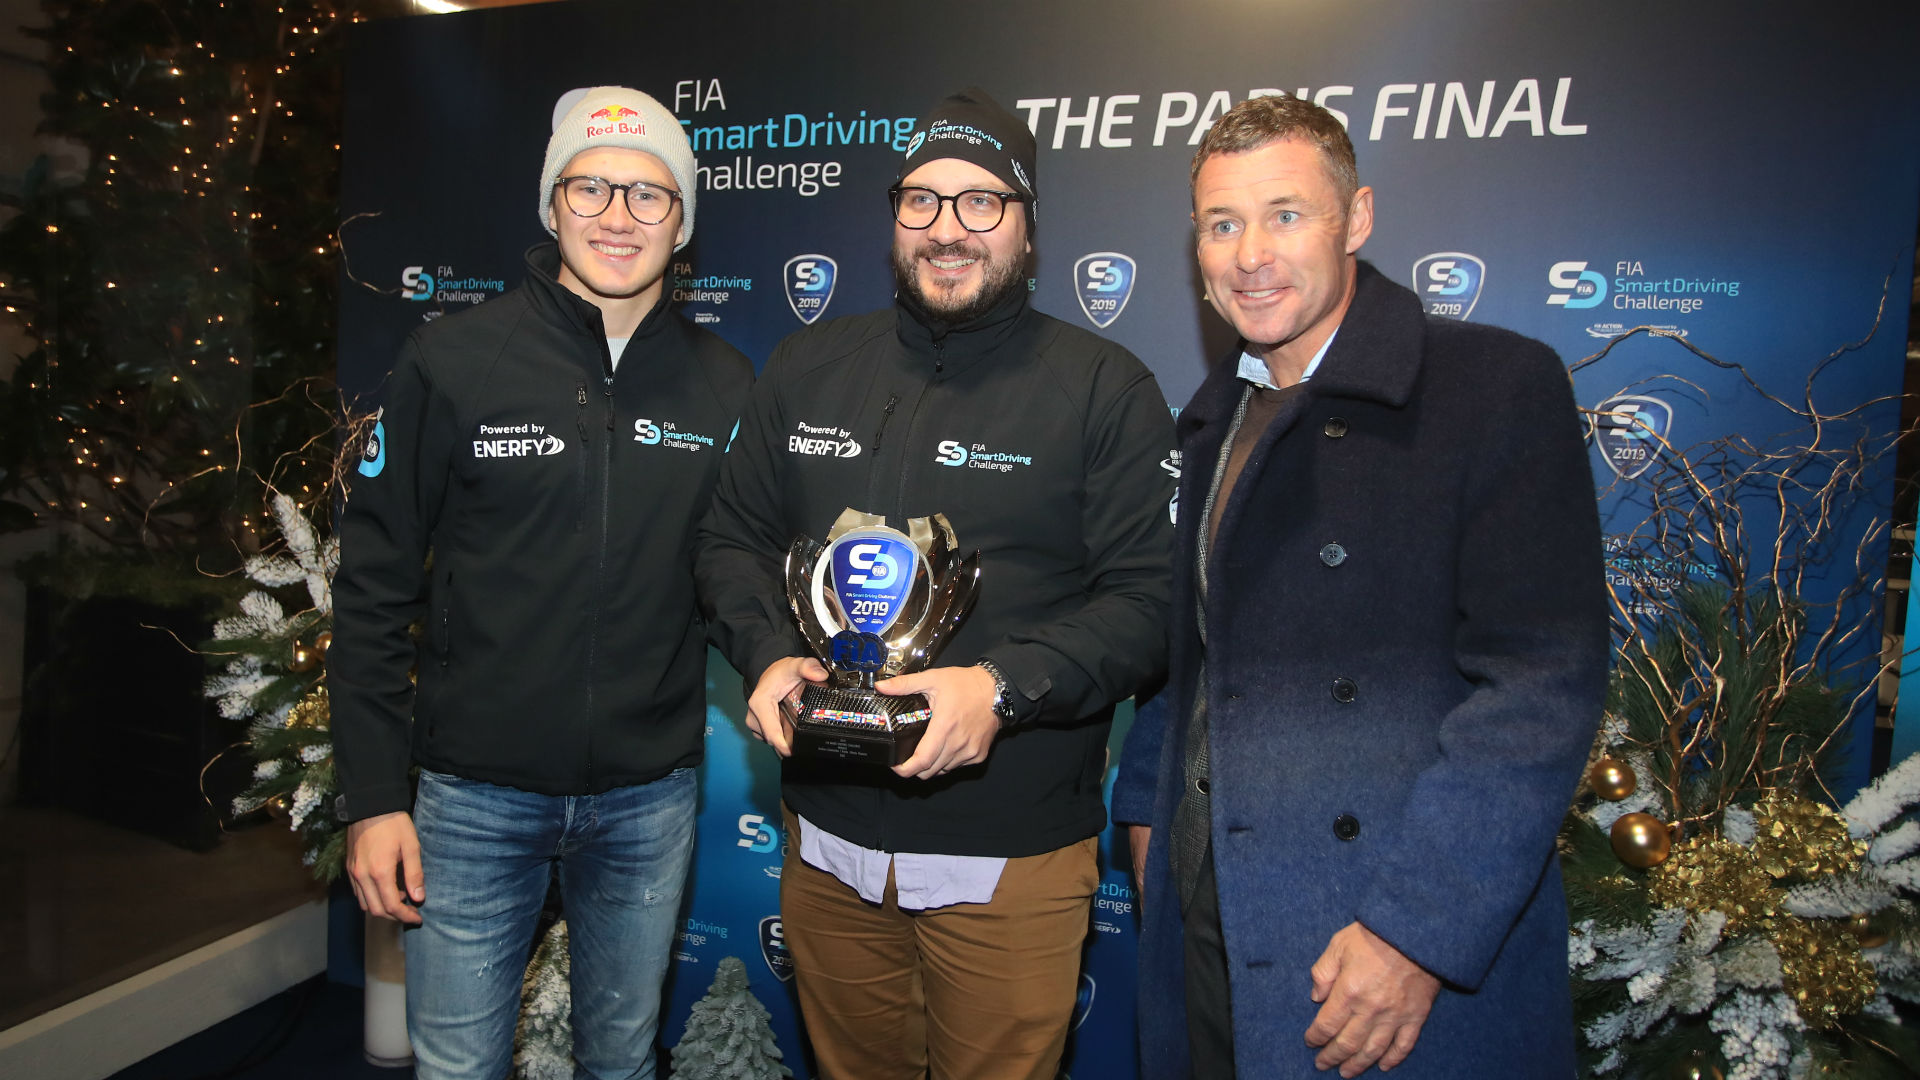 FIA Smart Driver Challenge final